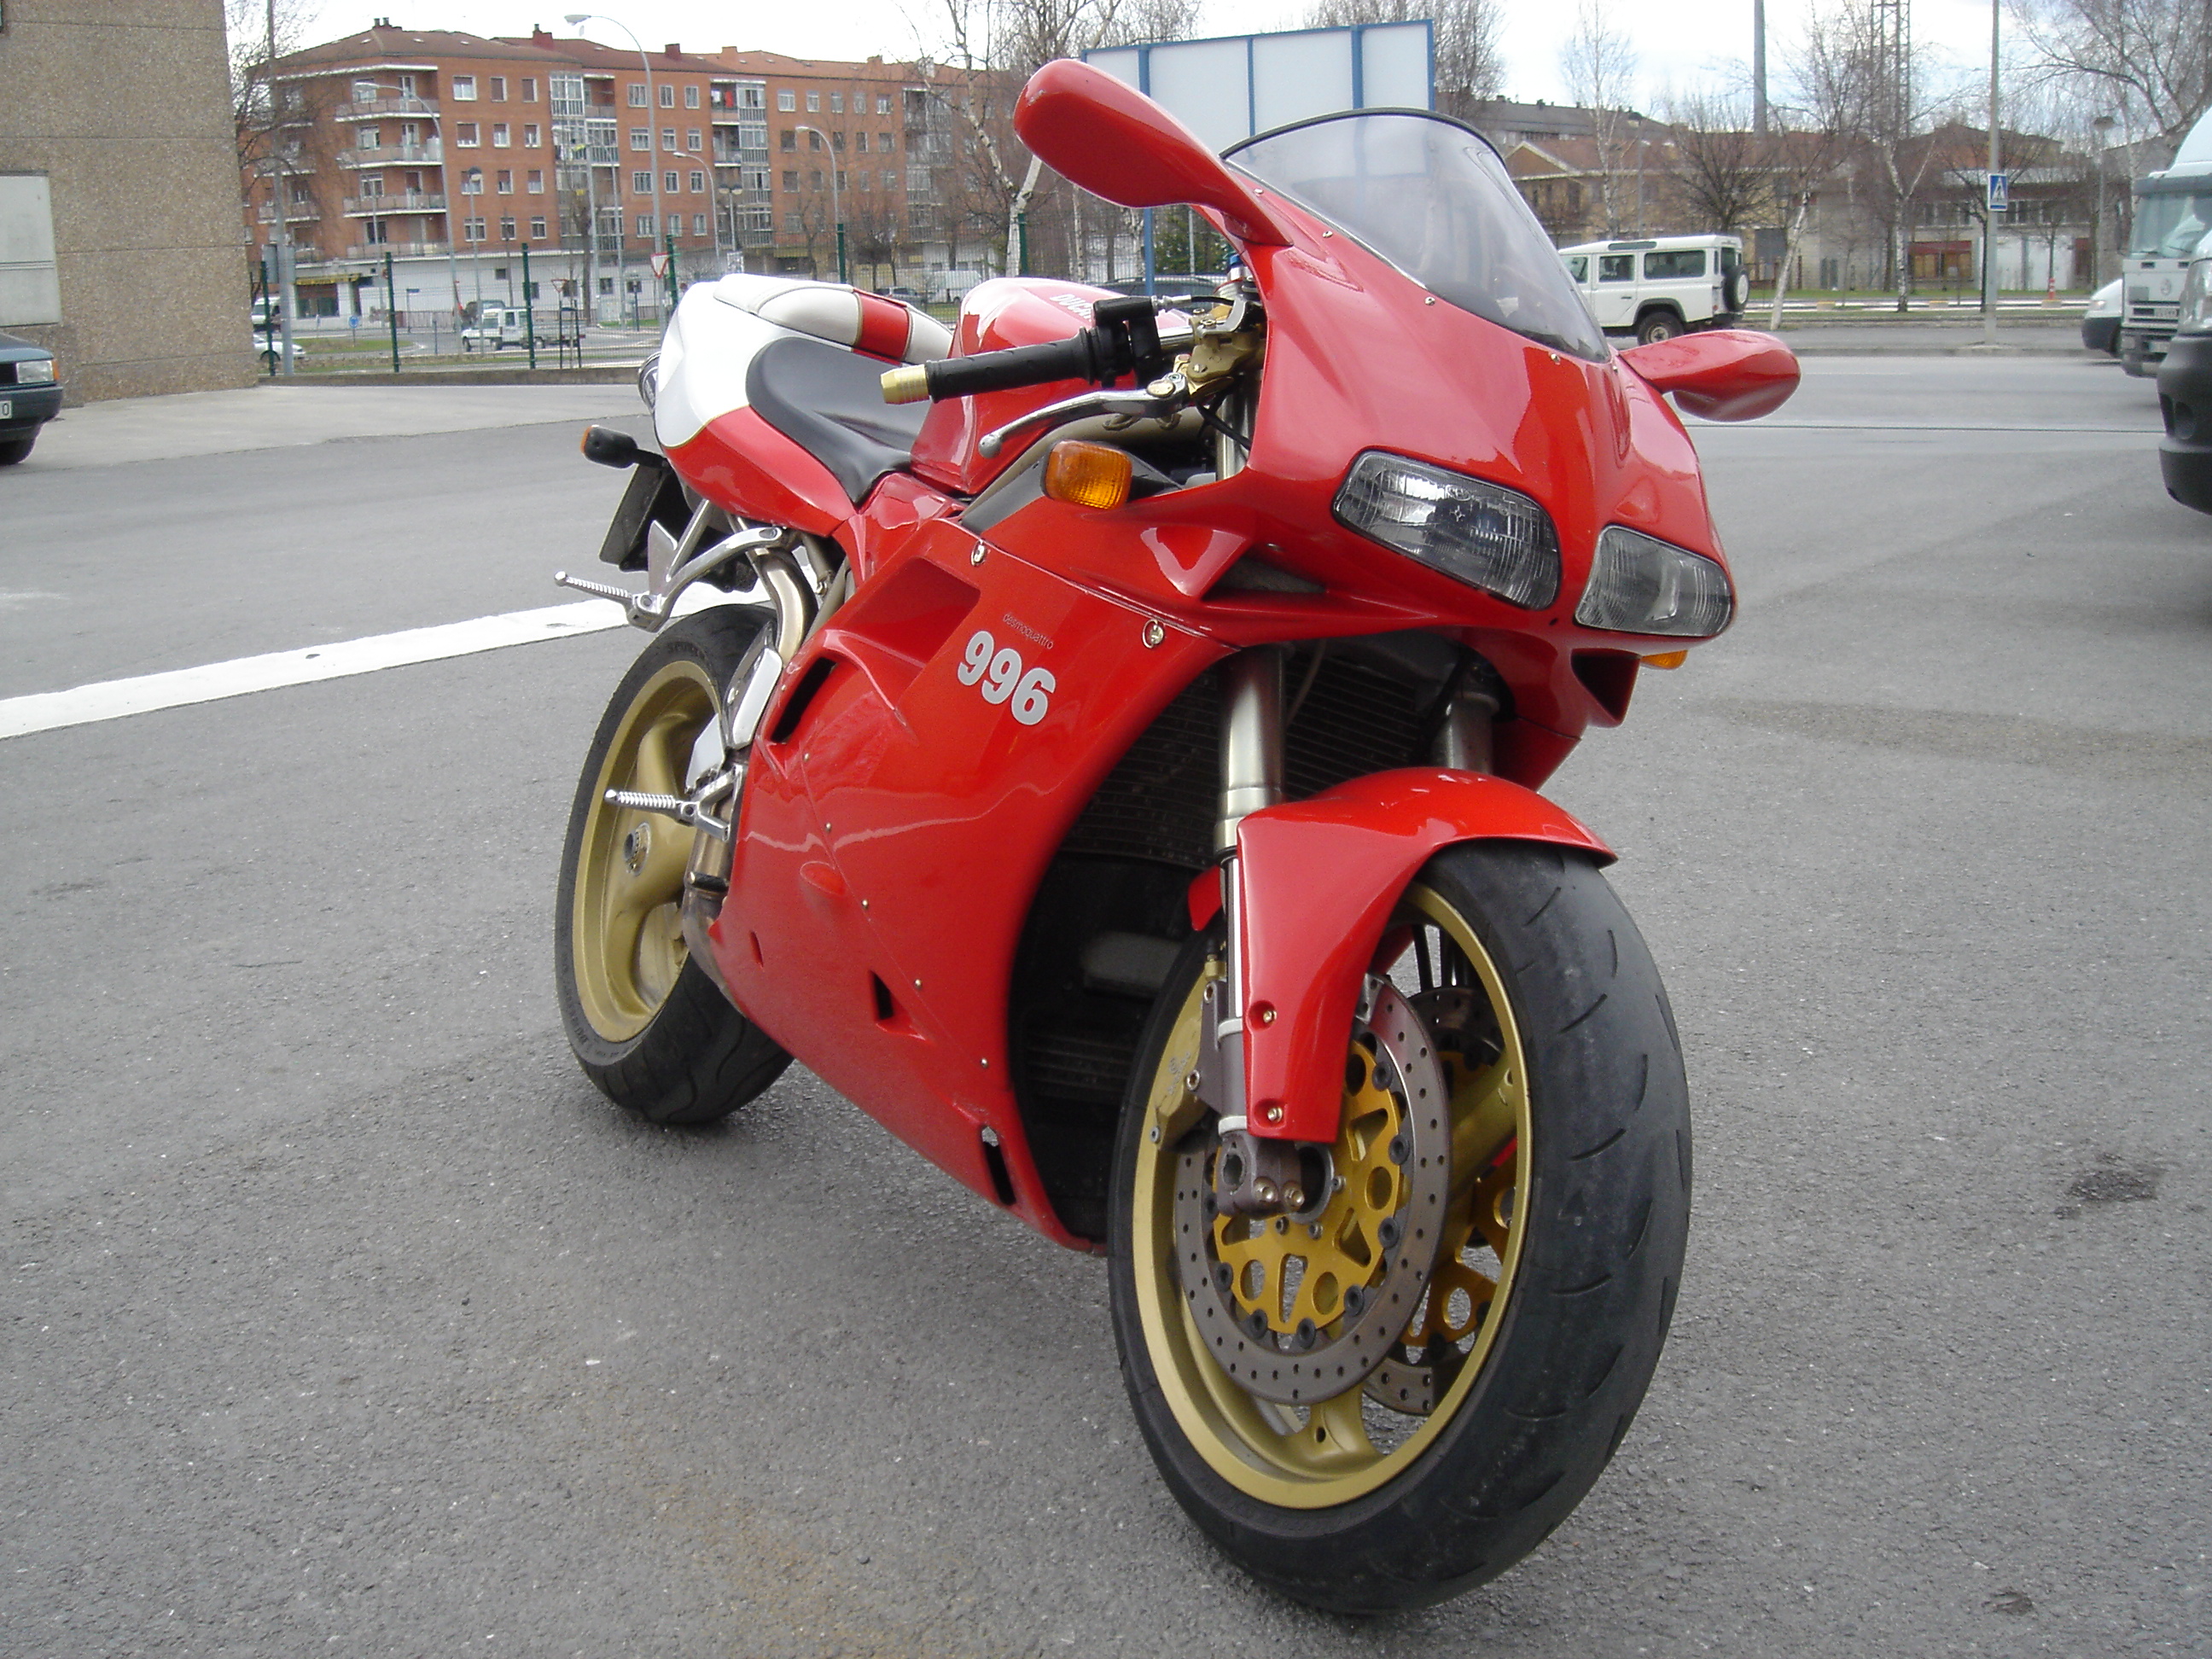 Ducati 996 SPS 2000 photo - 2